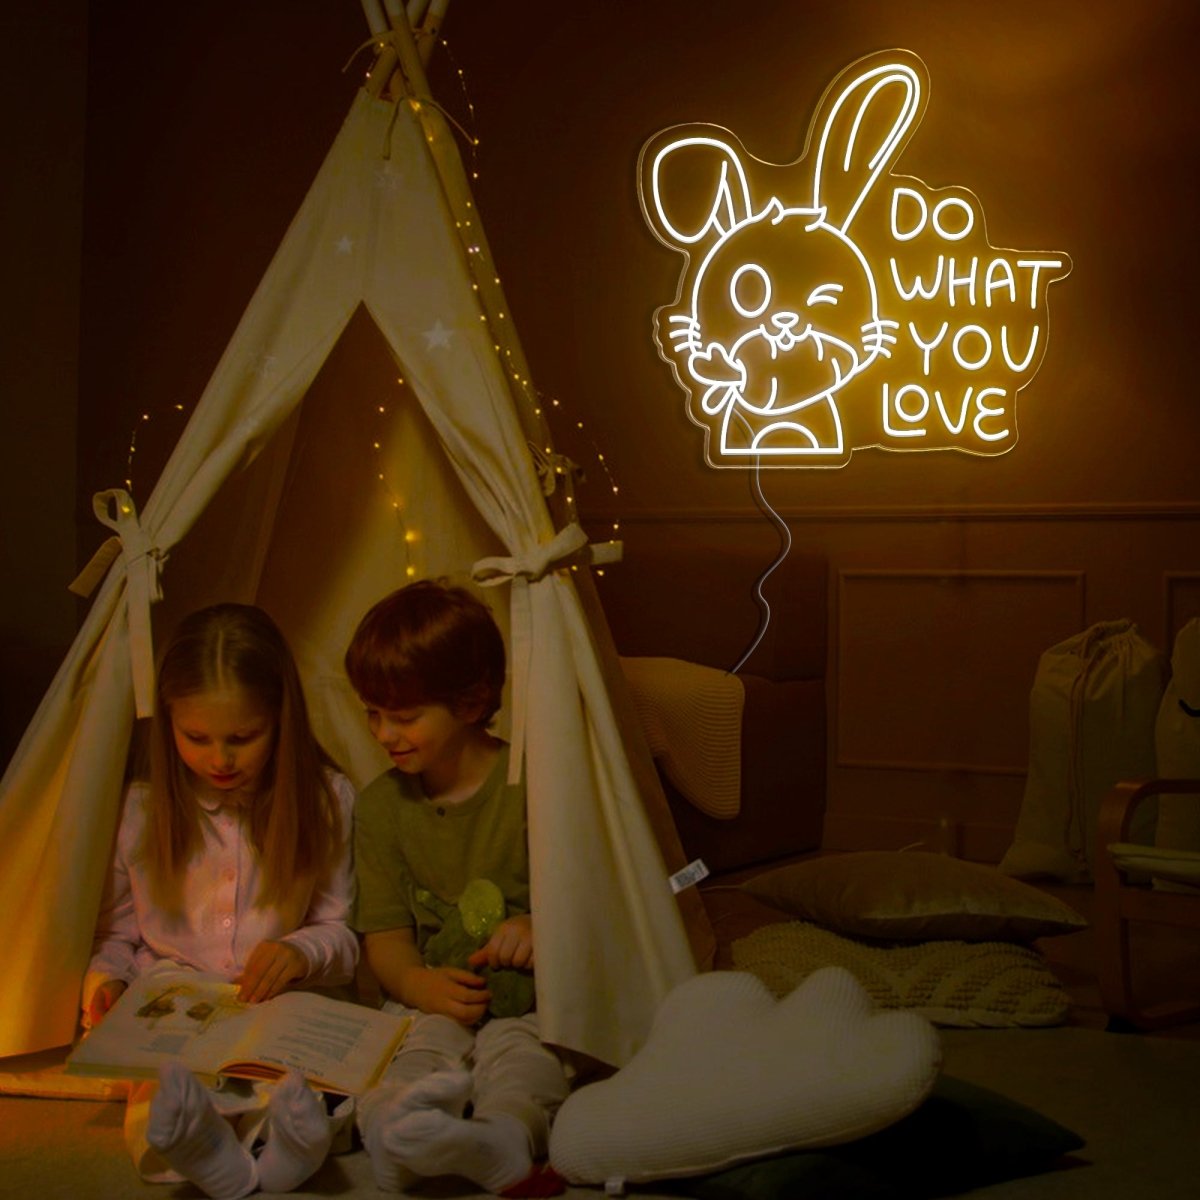 Rabbit Do What You Love Led Neon Sign - Reels Custom